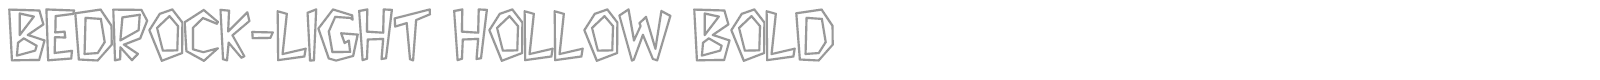 Bedrock-Light Hollow Bold font preview